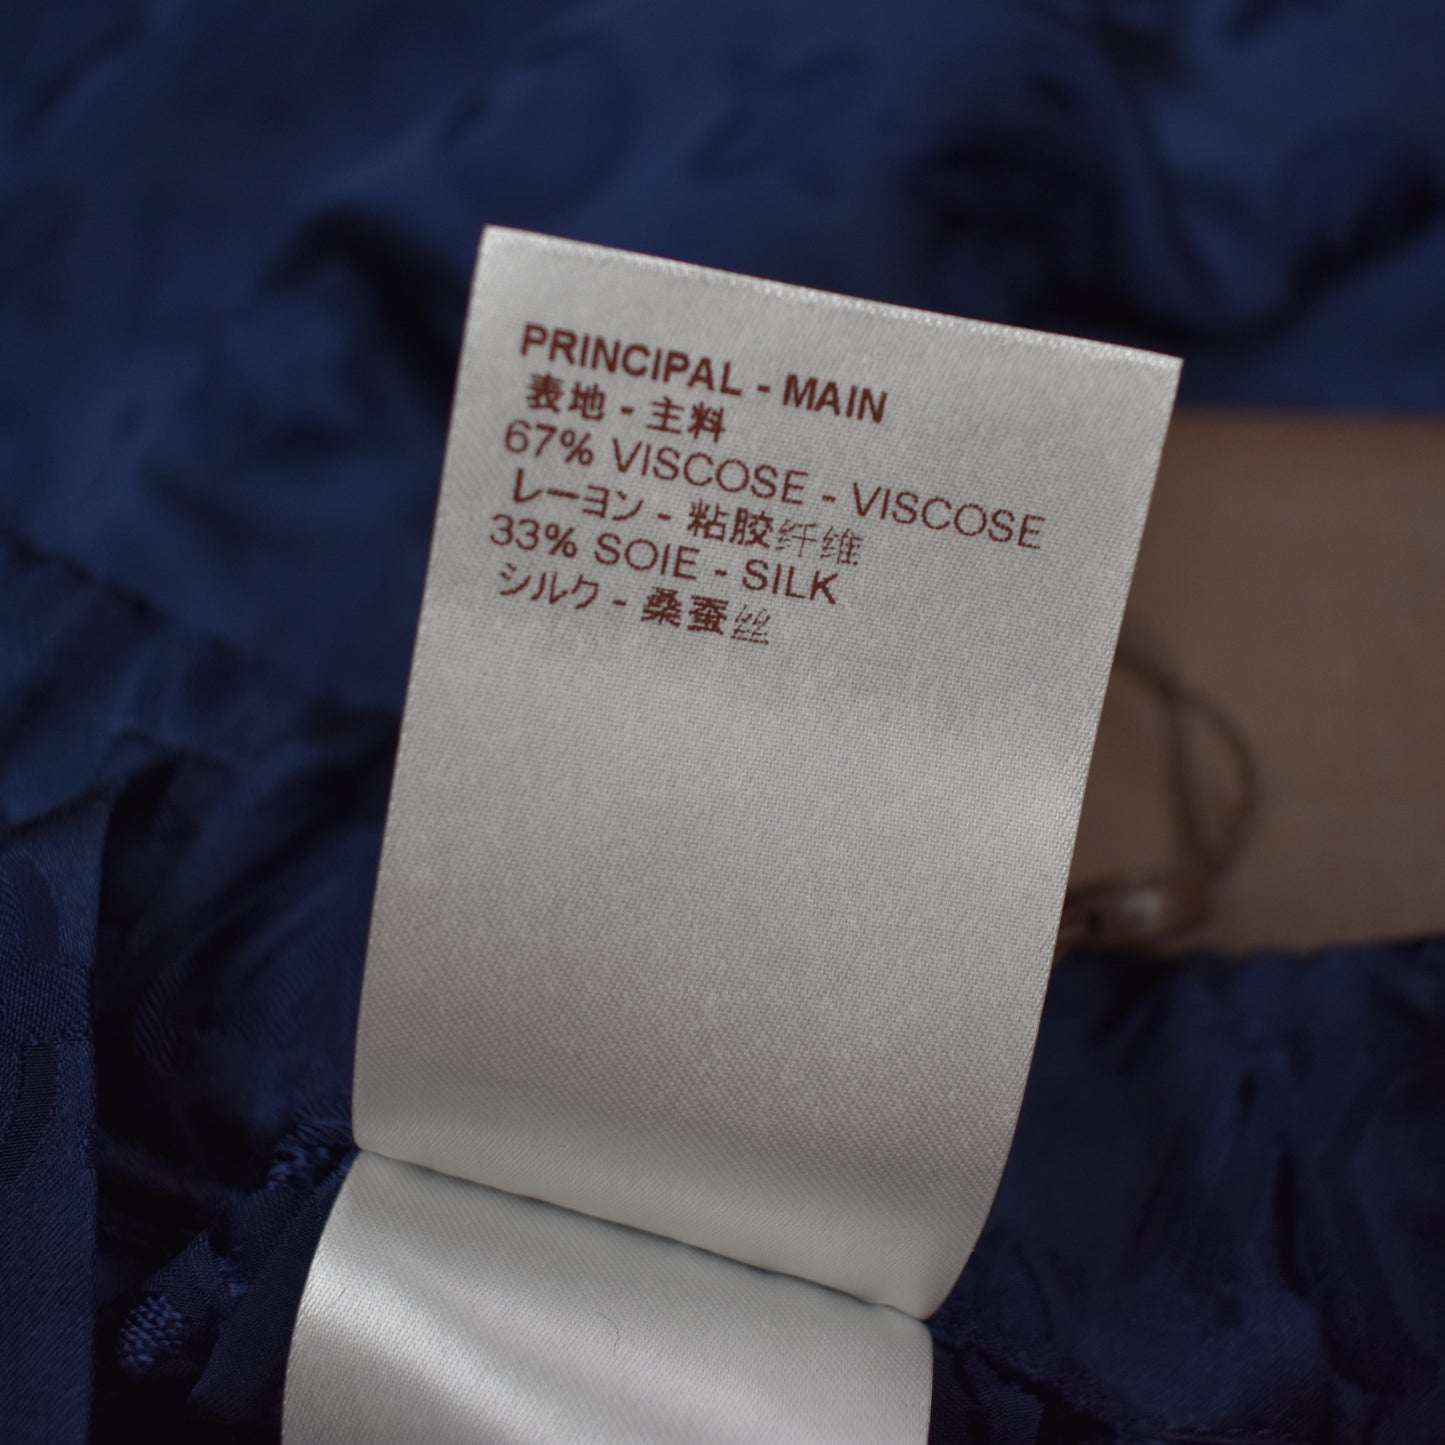 Louis Vuitton x Supreme - Navy Monogram Pajama Pants